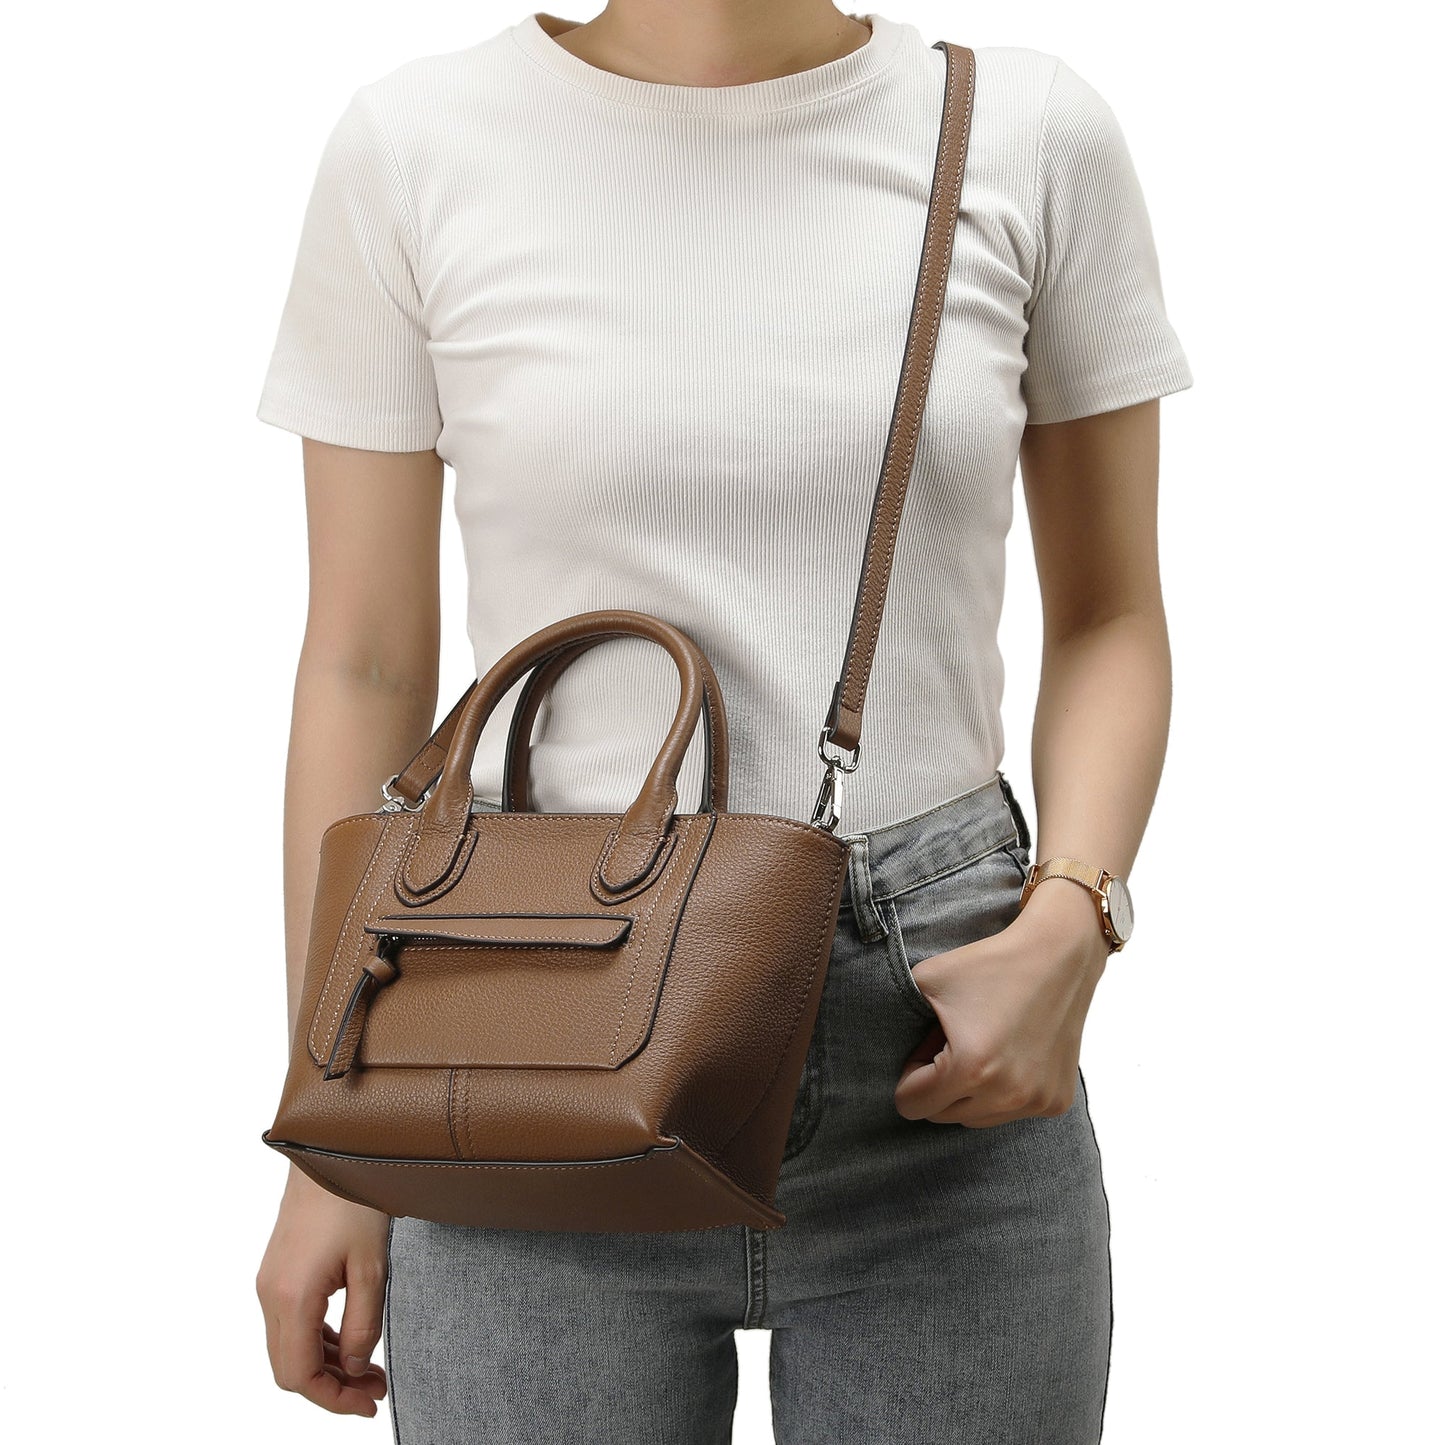 Full-Grain Leather Top-handle/Shoulder Bag